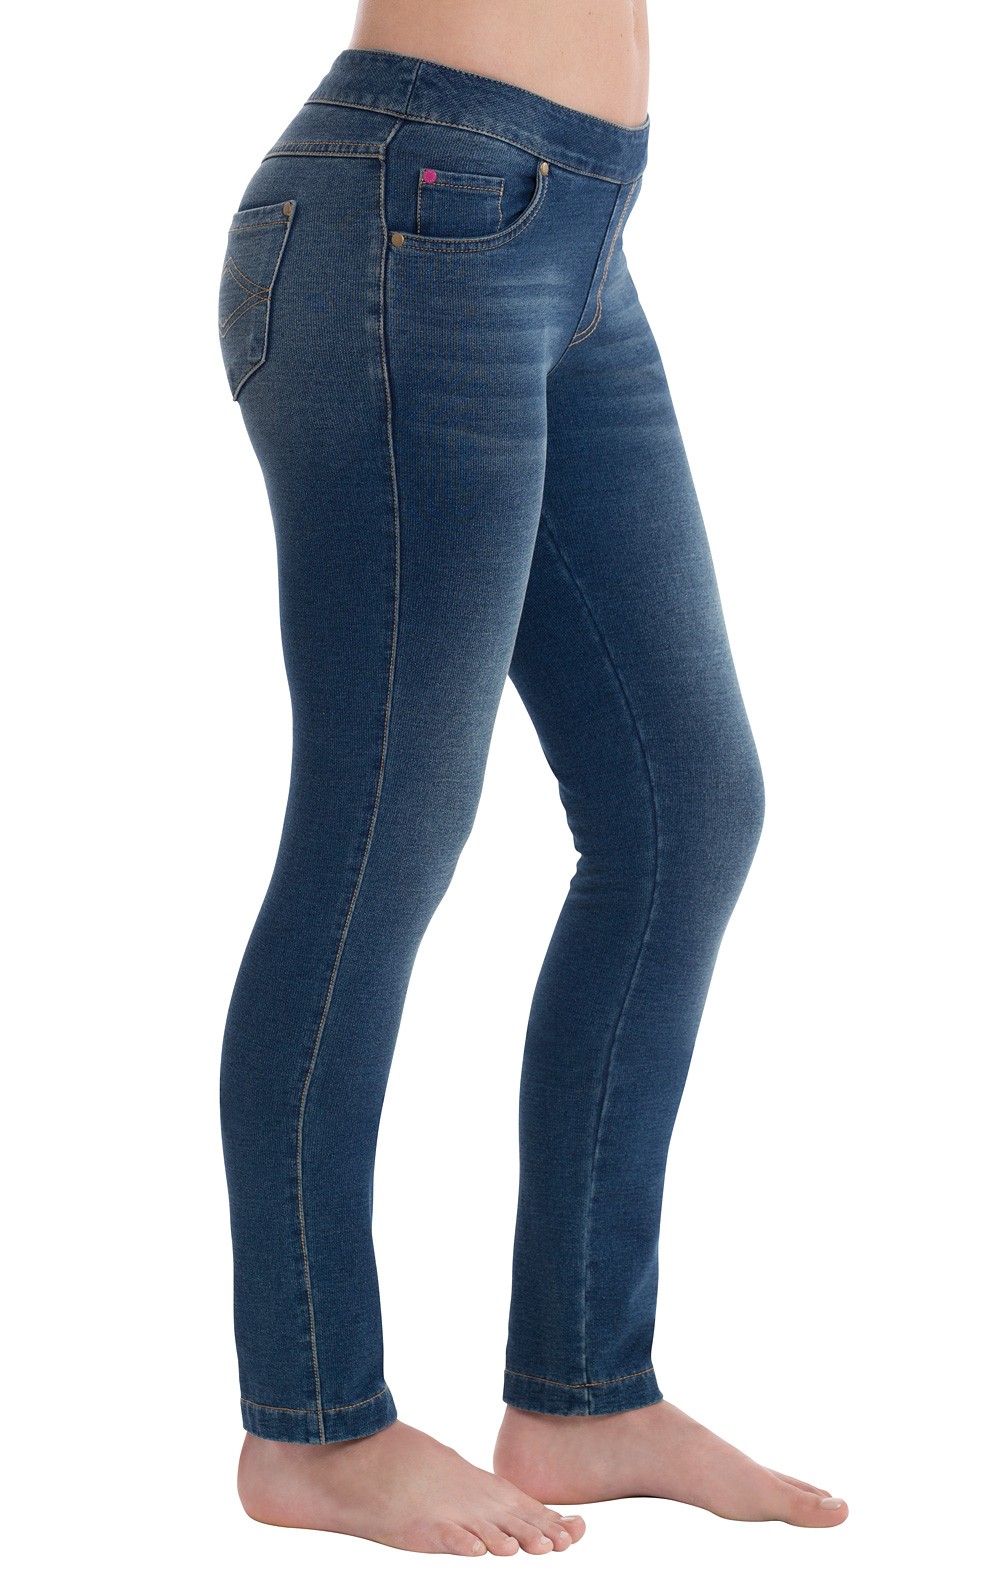 PajamaJeans® High-Waist Skinny Jeans in Women's Jeggings & Denim